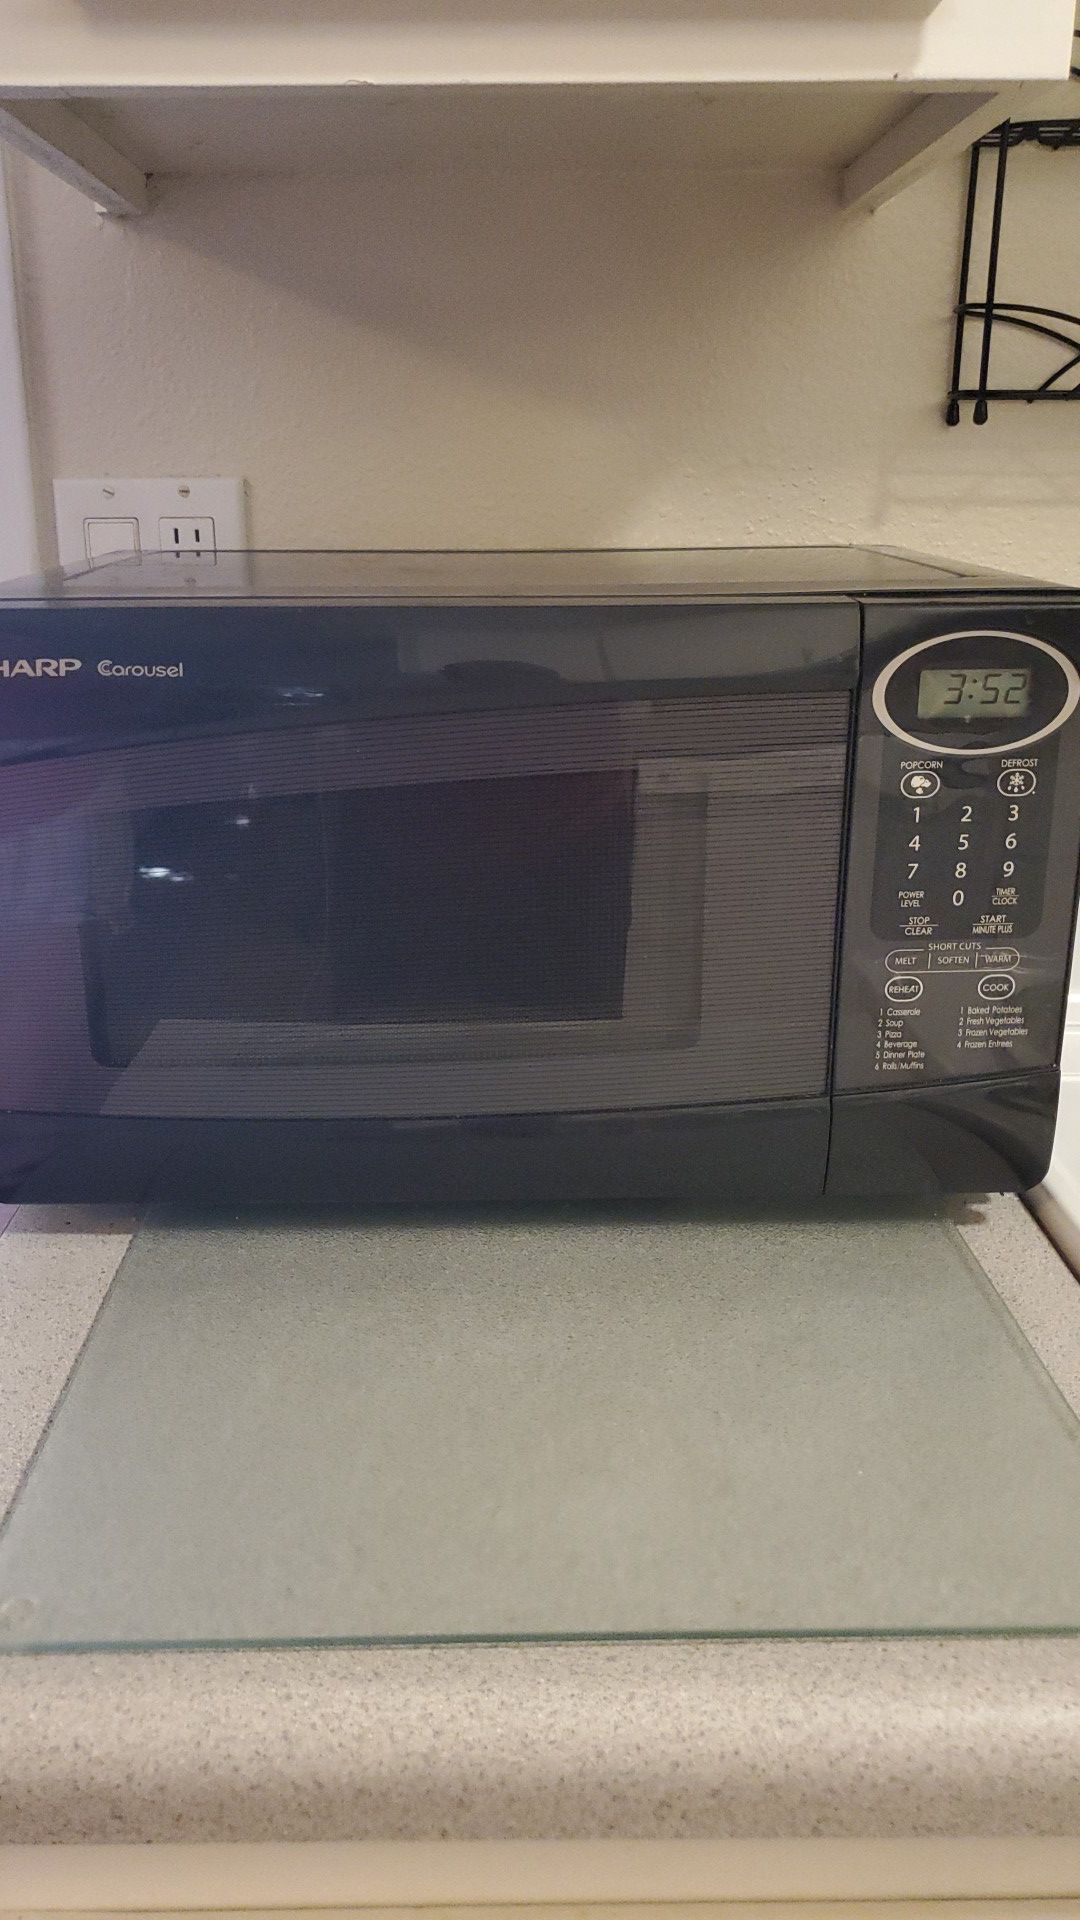 Basic Microwave